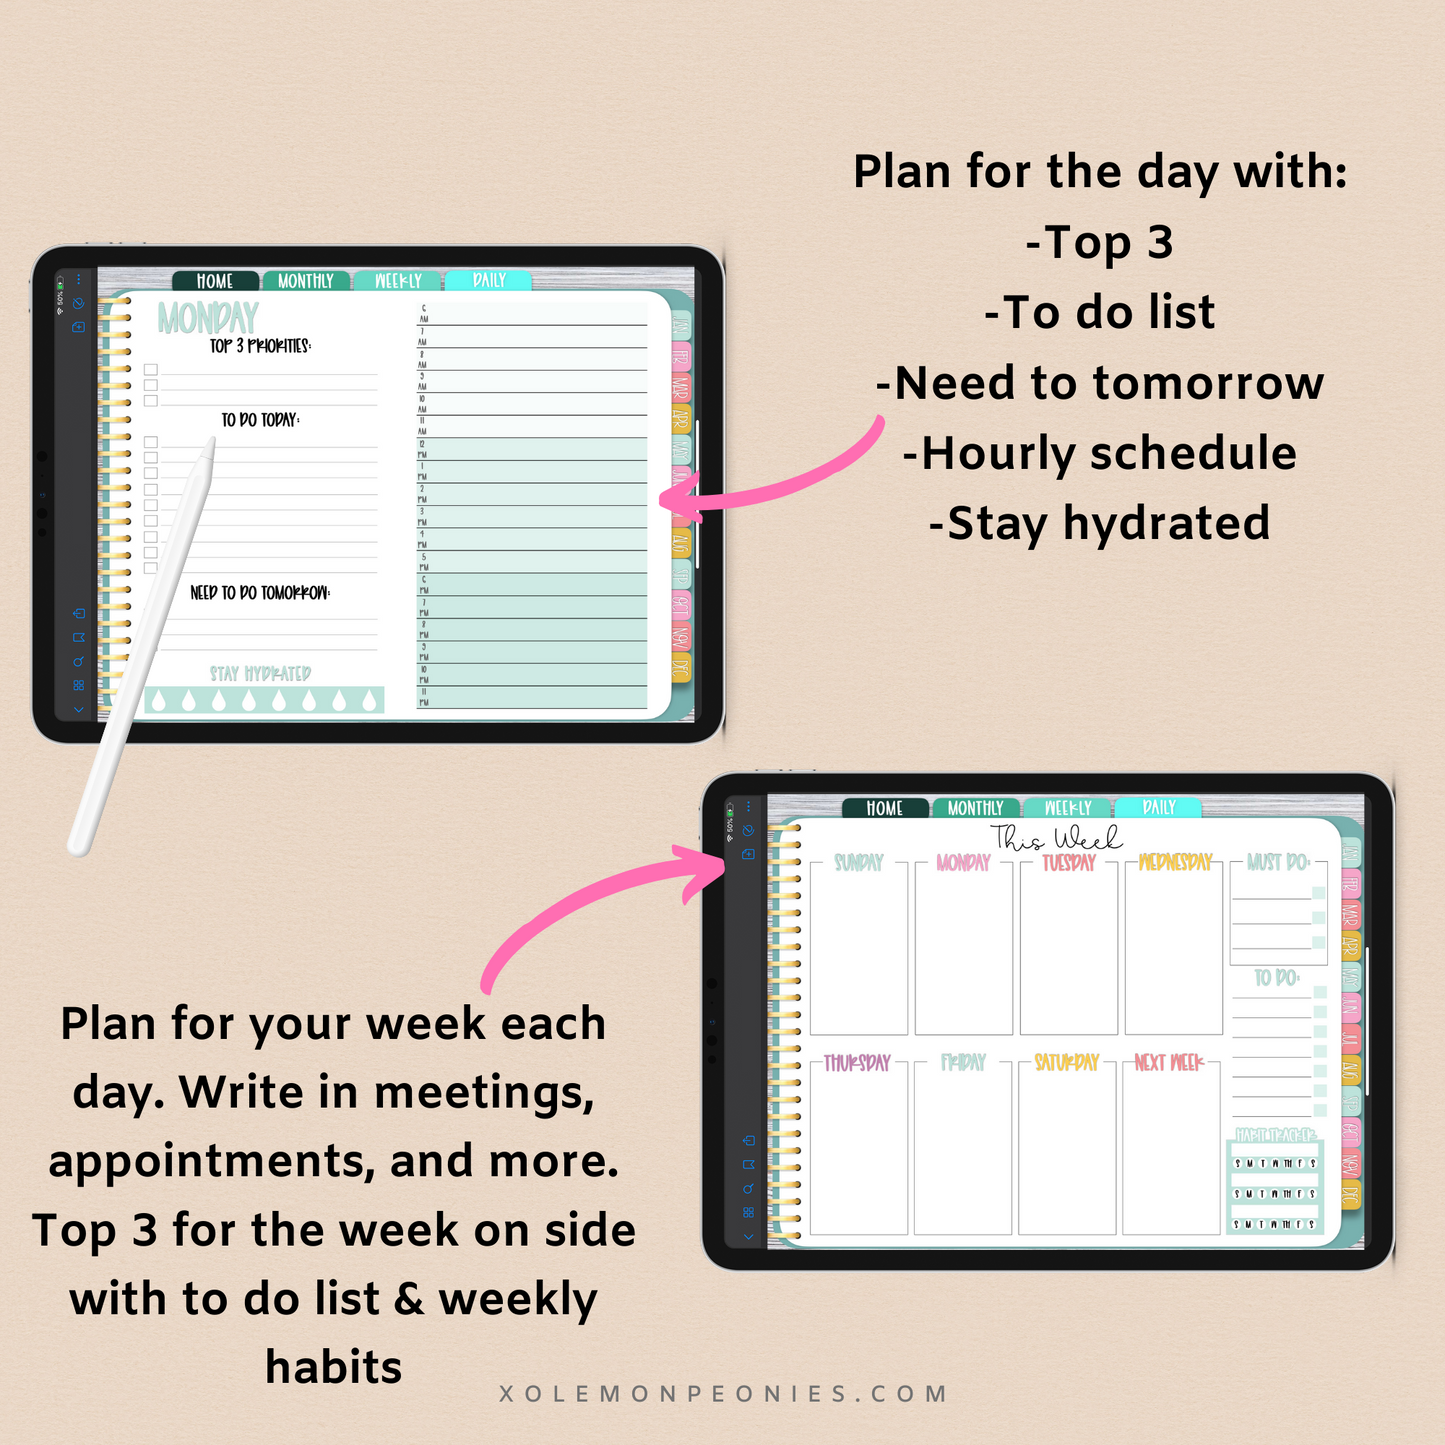 Digital Planner for iPad